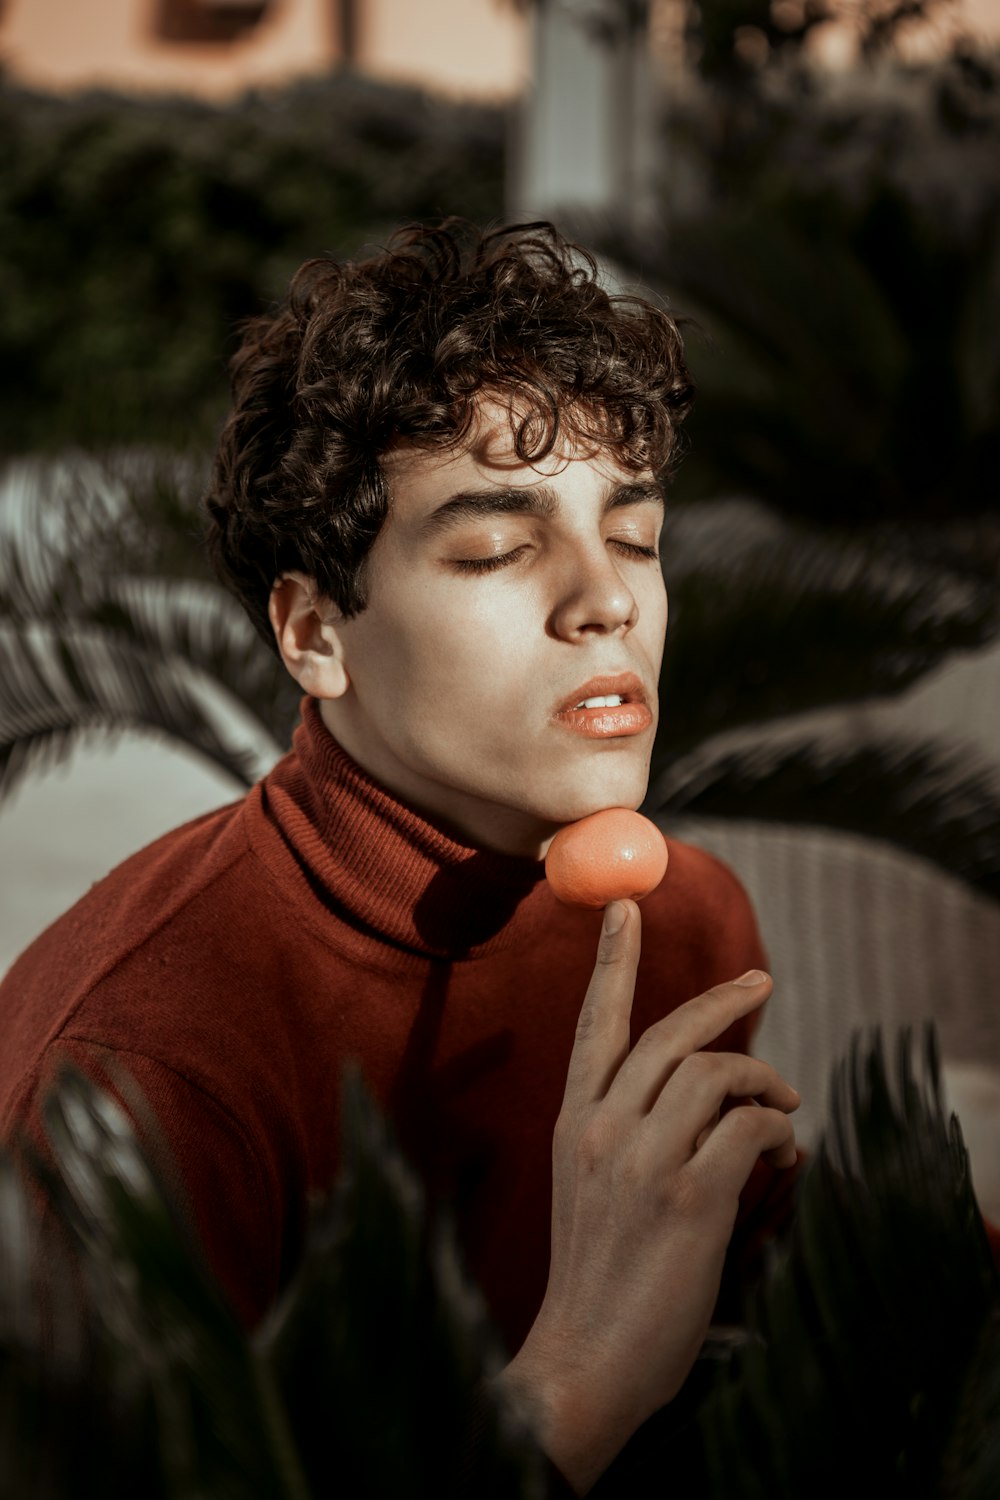 man in red sweater holding orange fruit